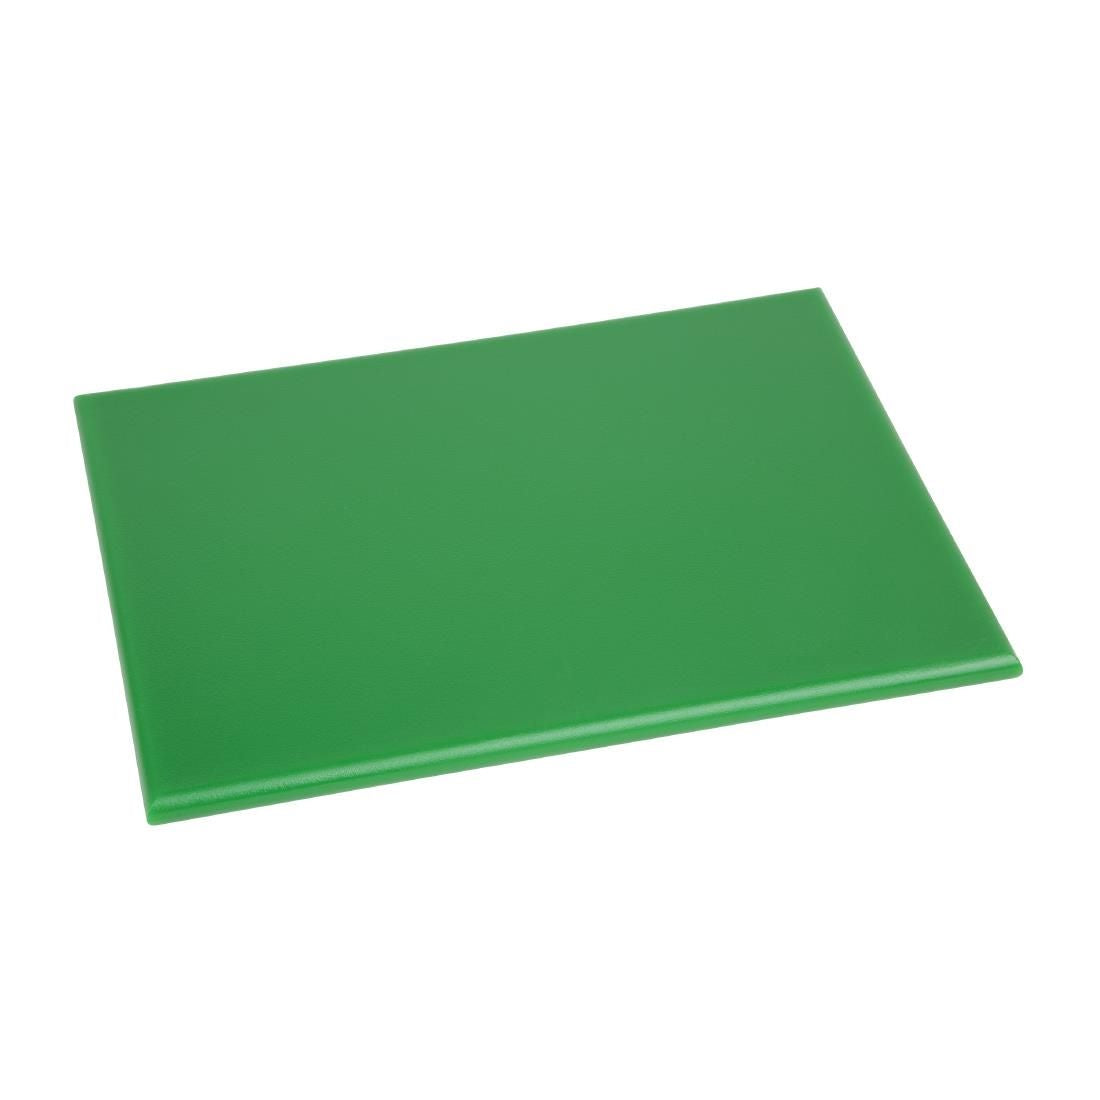 Hygiplas High Density Green Chopping Board Small JD Catering Equipment Solutions Ltd